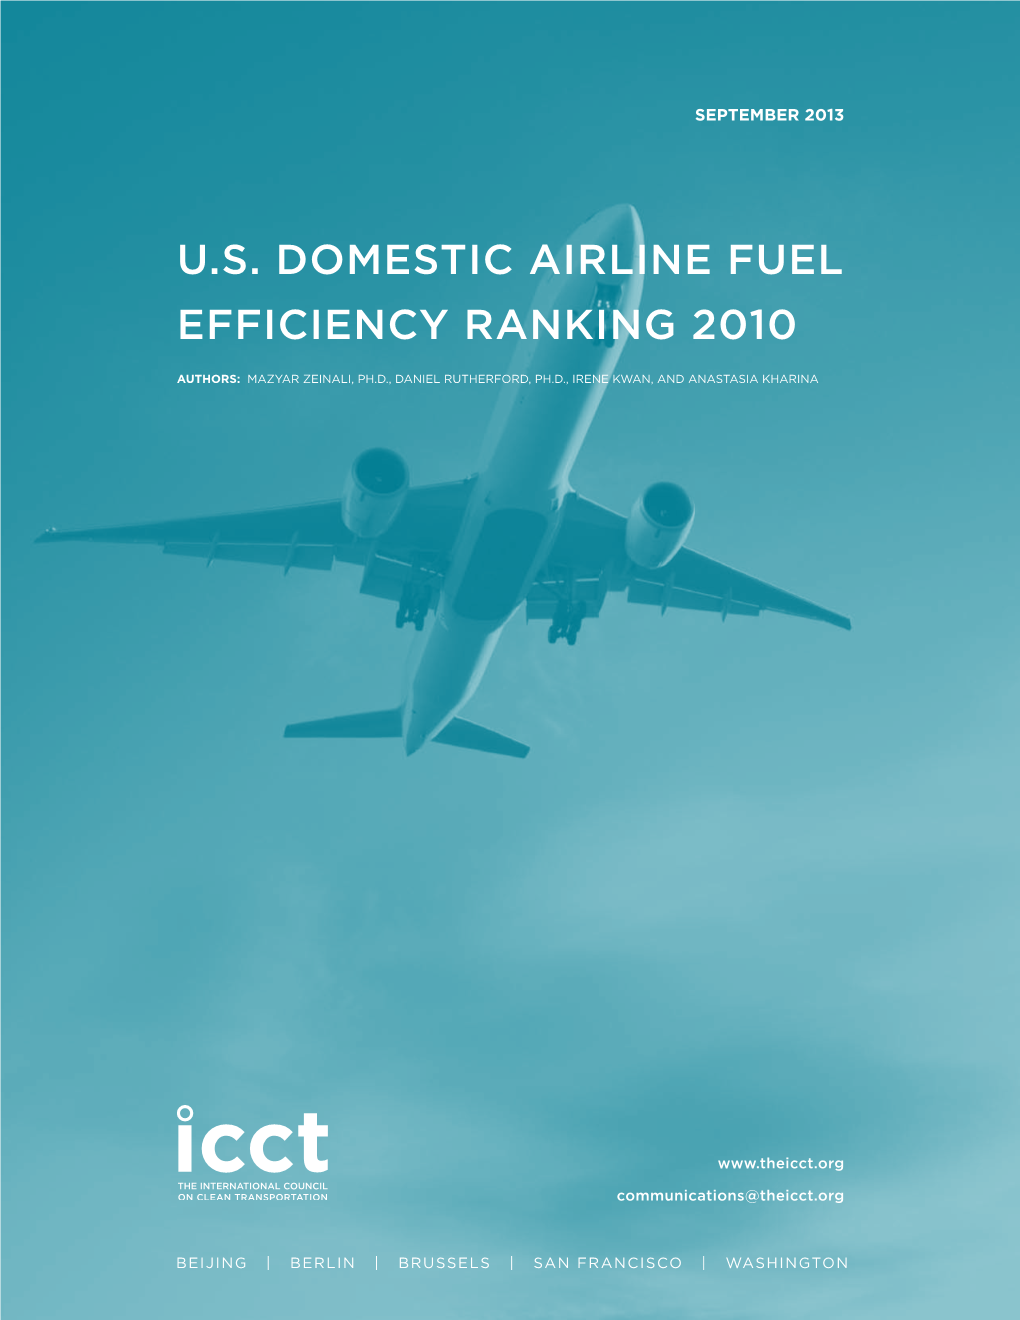 U.S. Domestic Airline Fuel Efficiency Ranking, 2010